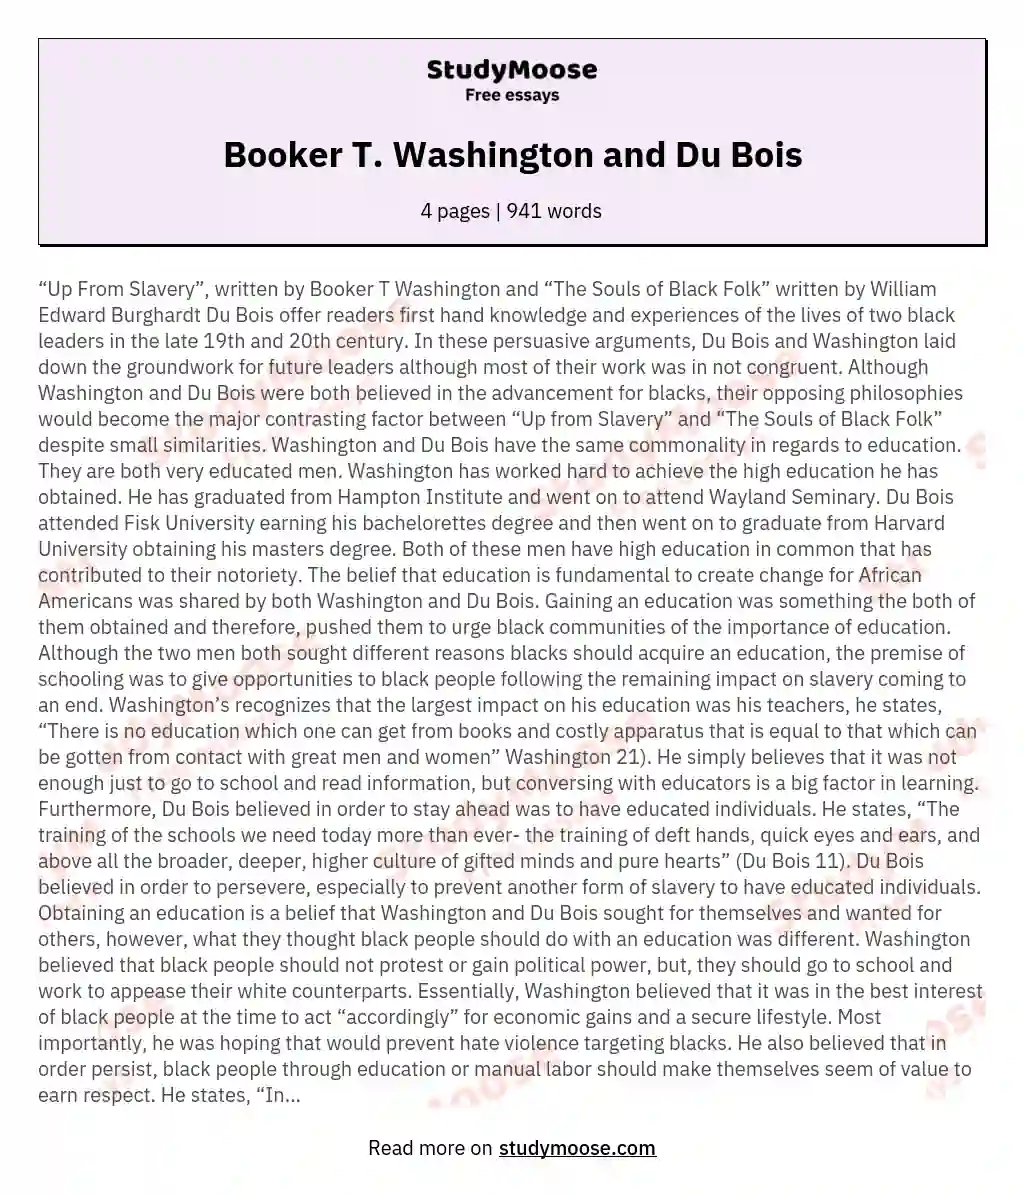 Booker T. Washington and Du Bois